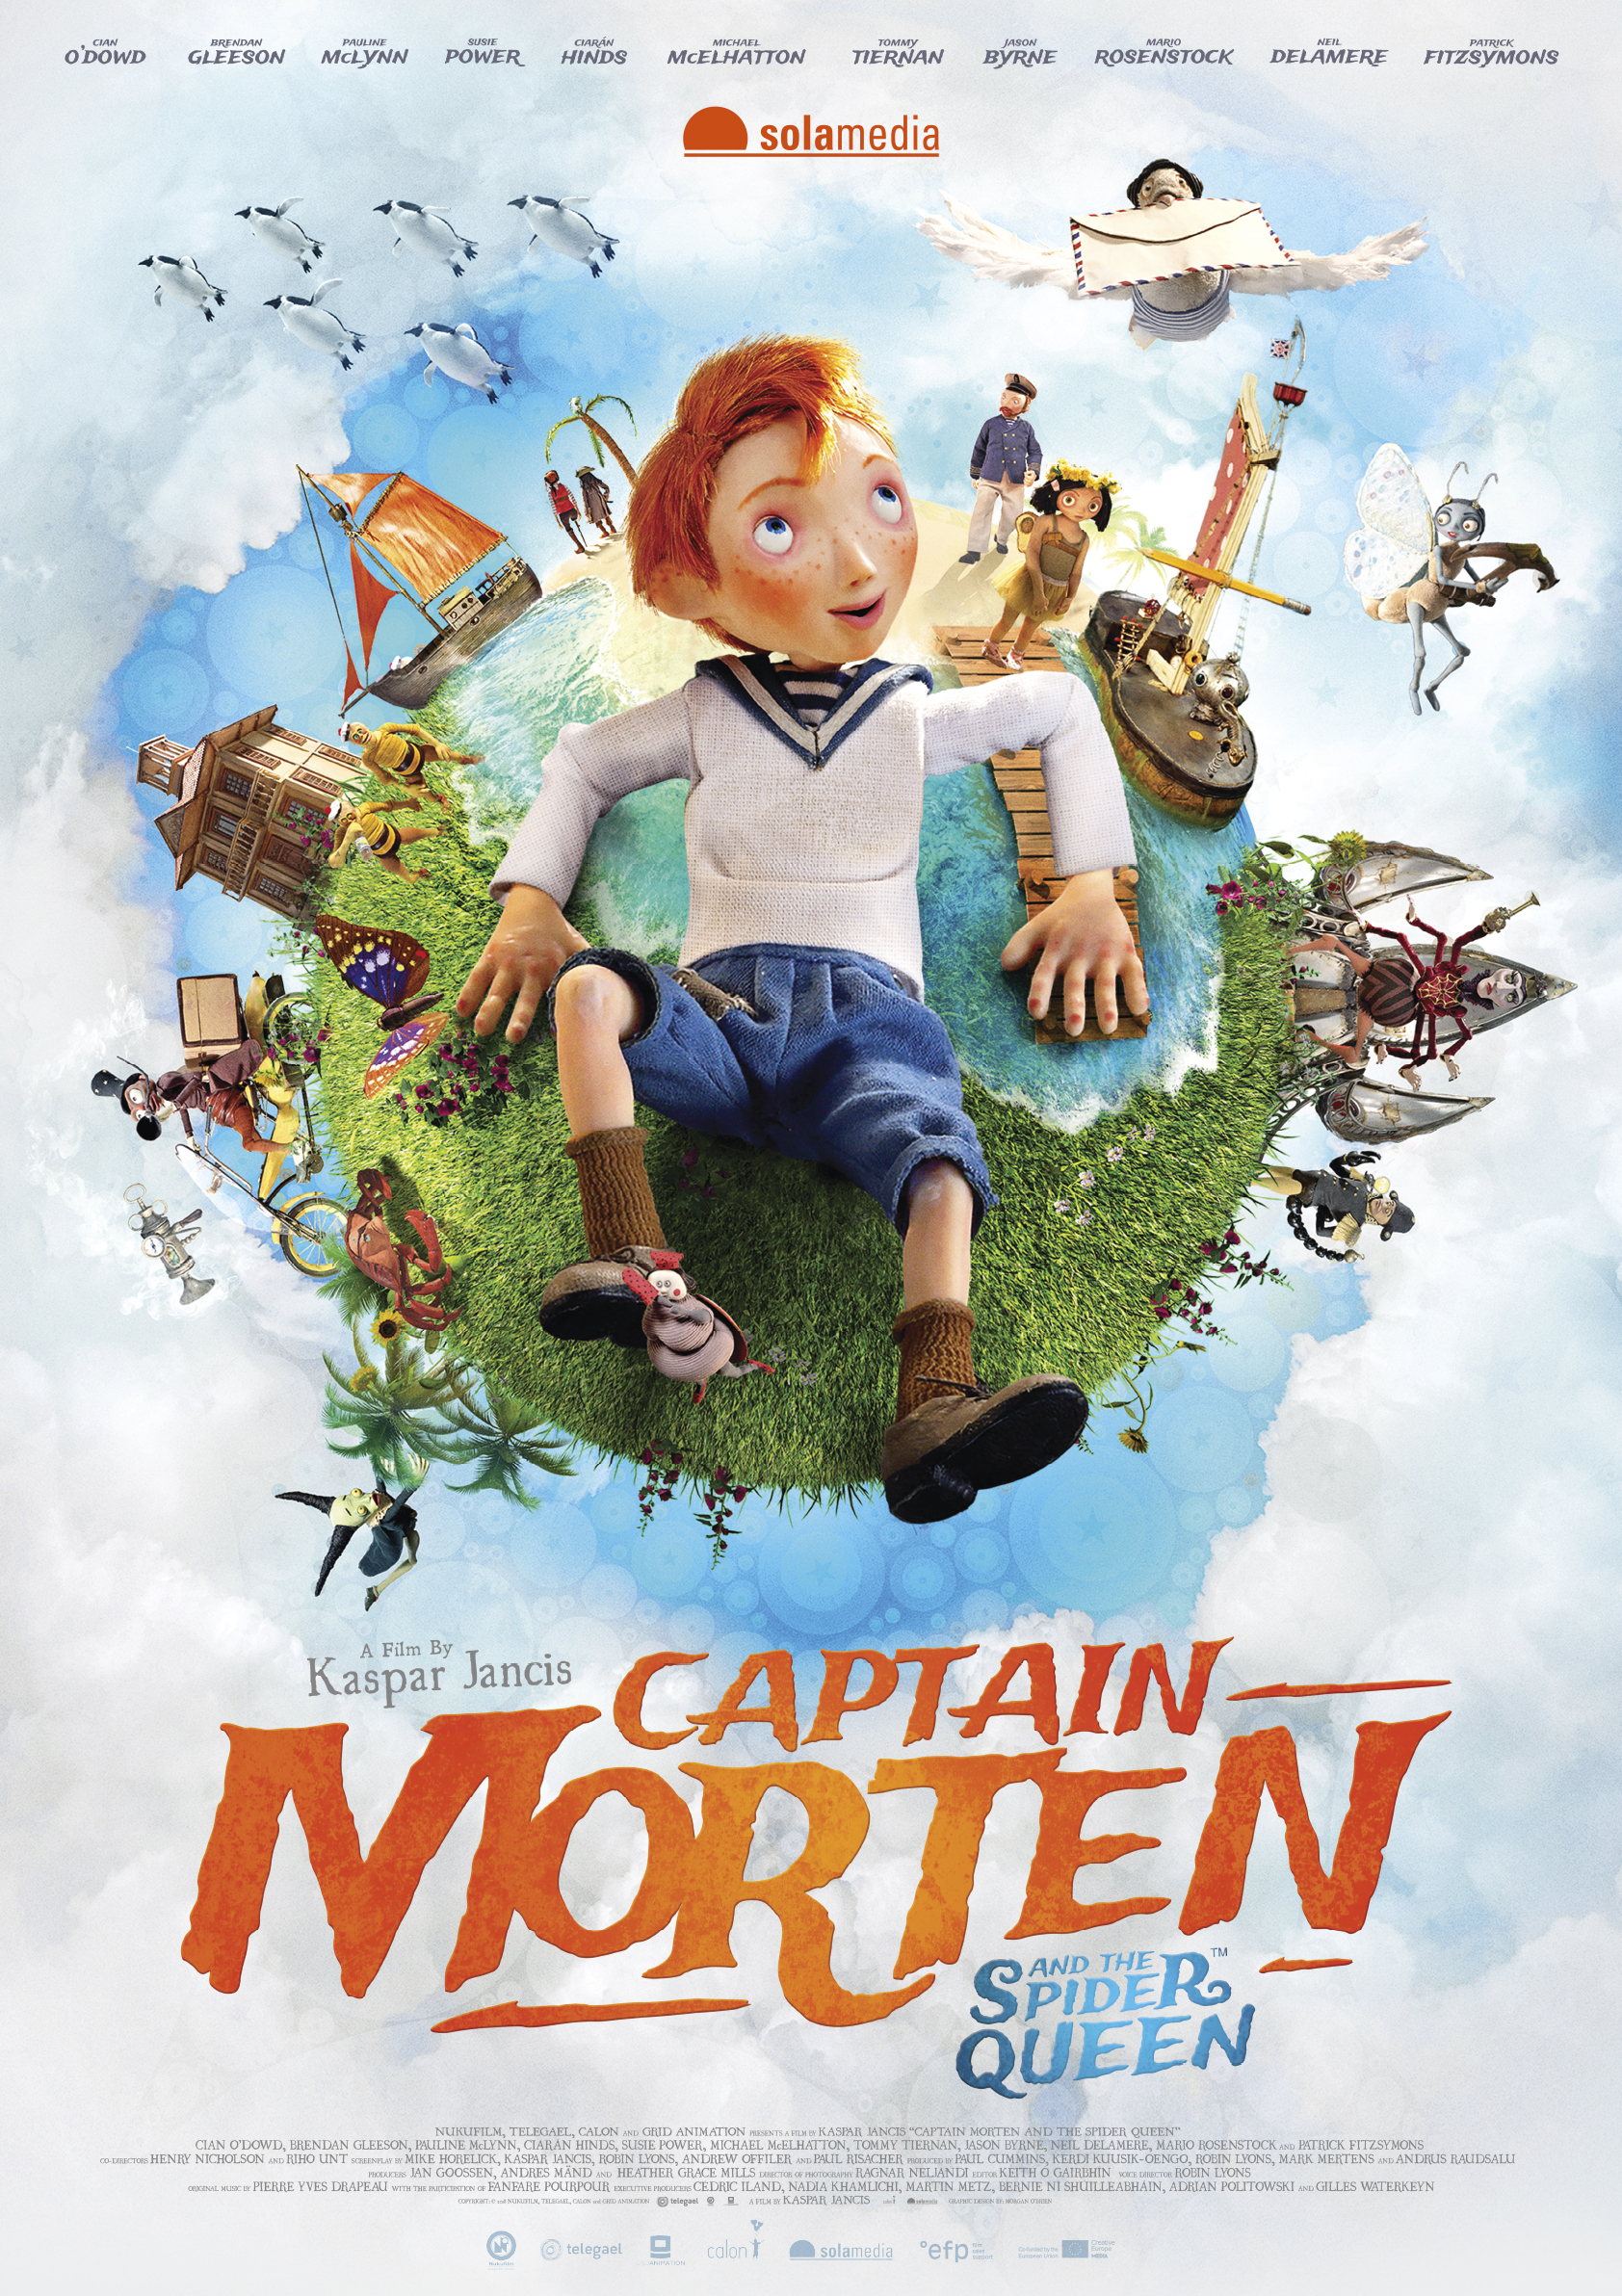 Nonton film Captain Morten and the Spider Queen layarkaca21 indoxx1 ganool online streaming terbaru